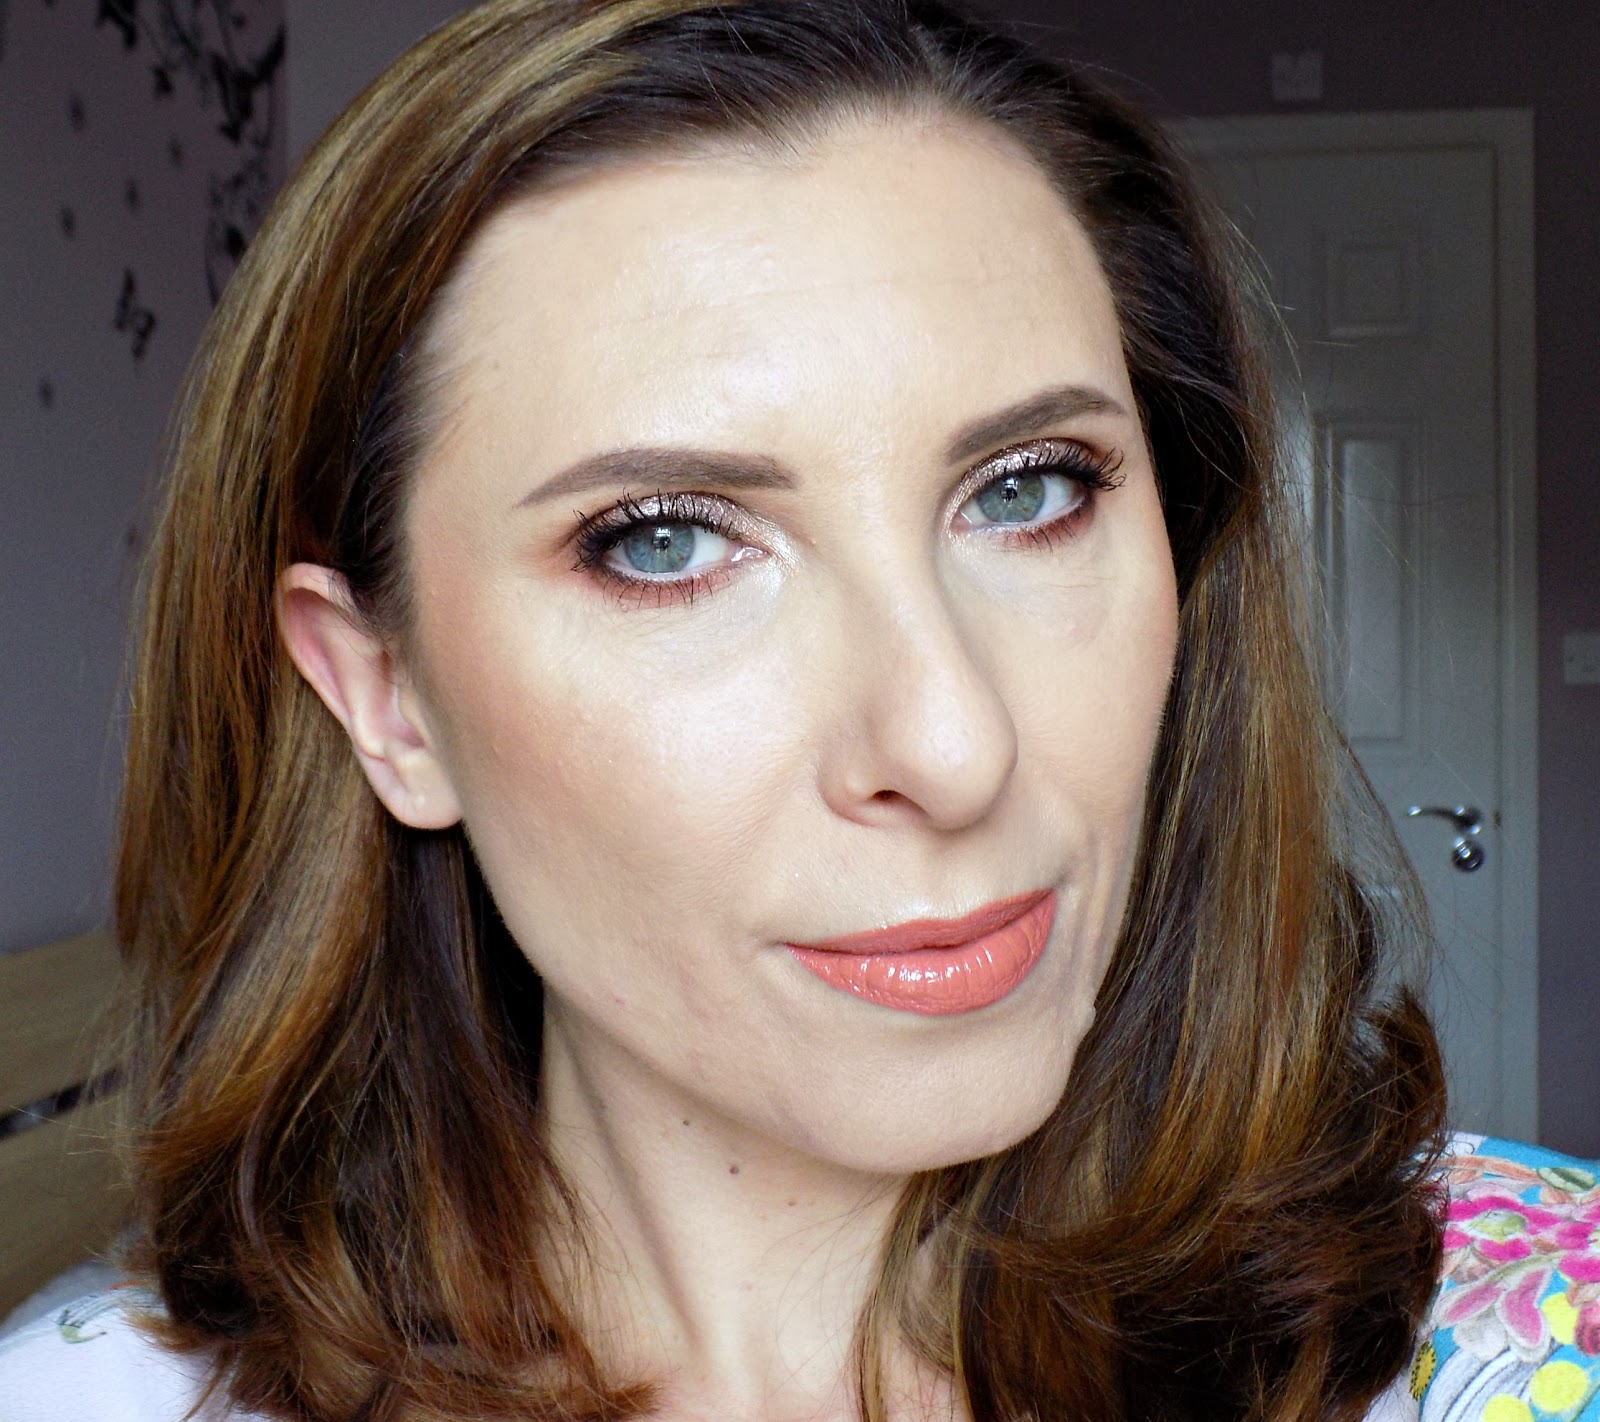 Makeup look using Pixi Liquid Fairy Lights and Pixi highlighters 